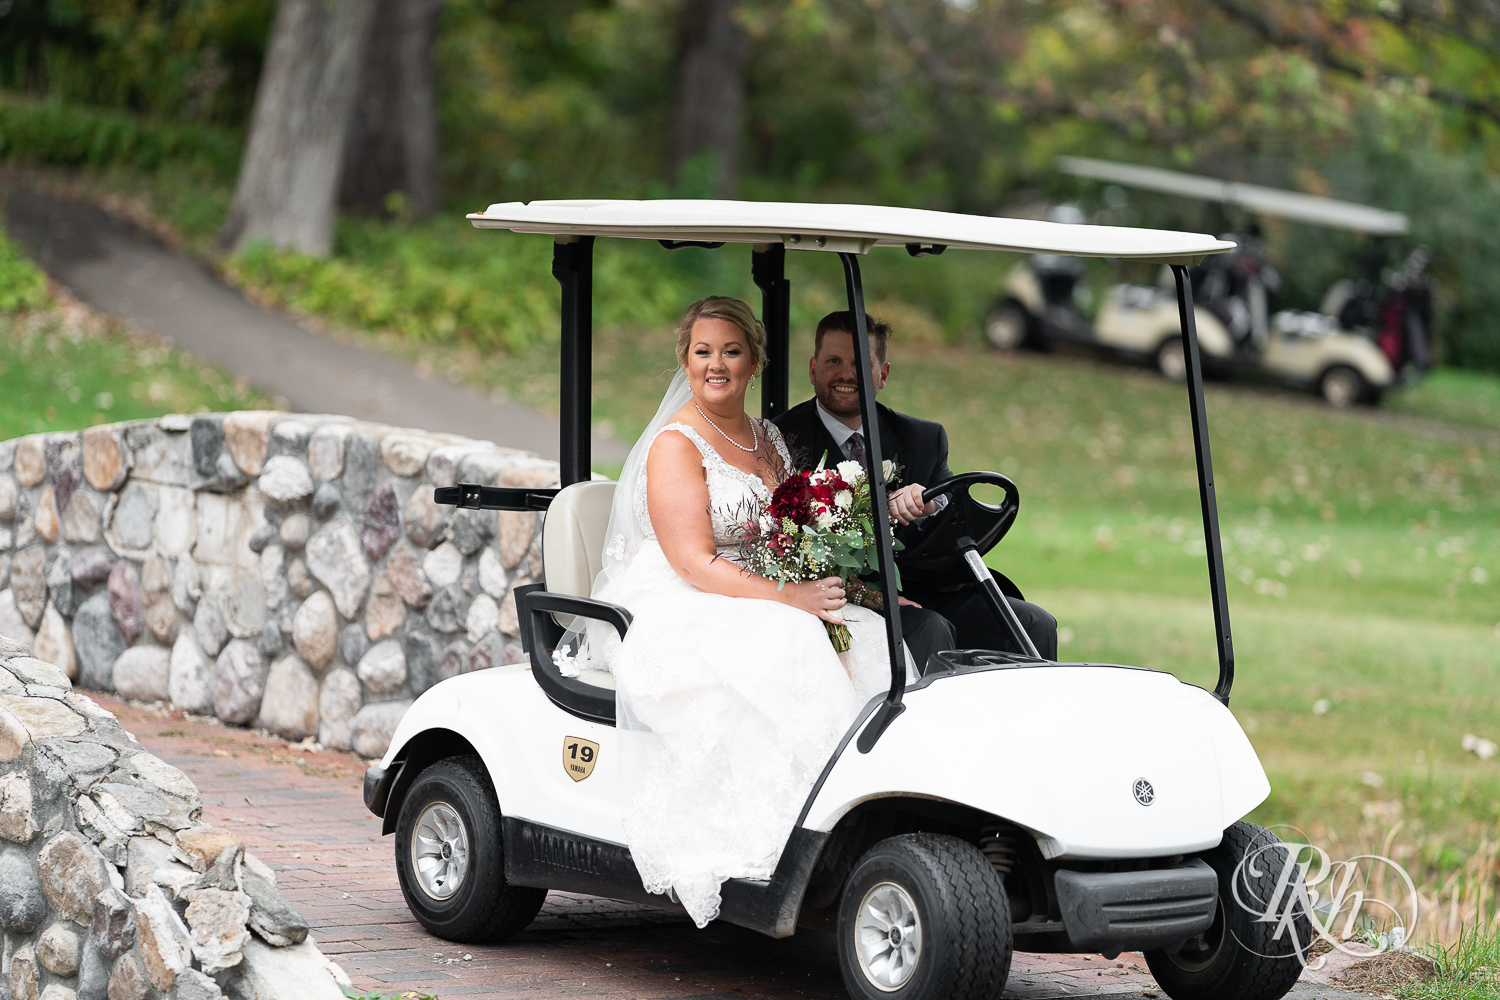 Bride and groom ride on golf cart at Hastings Golf Club in Hastings, Minnesota.